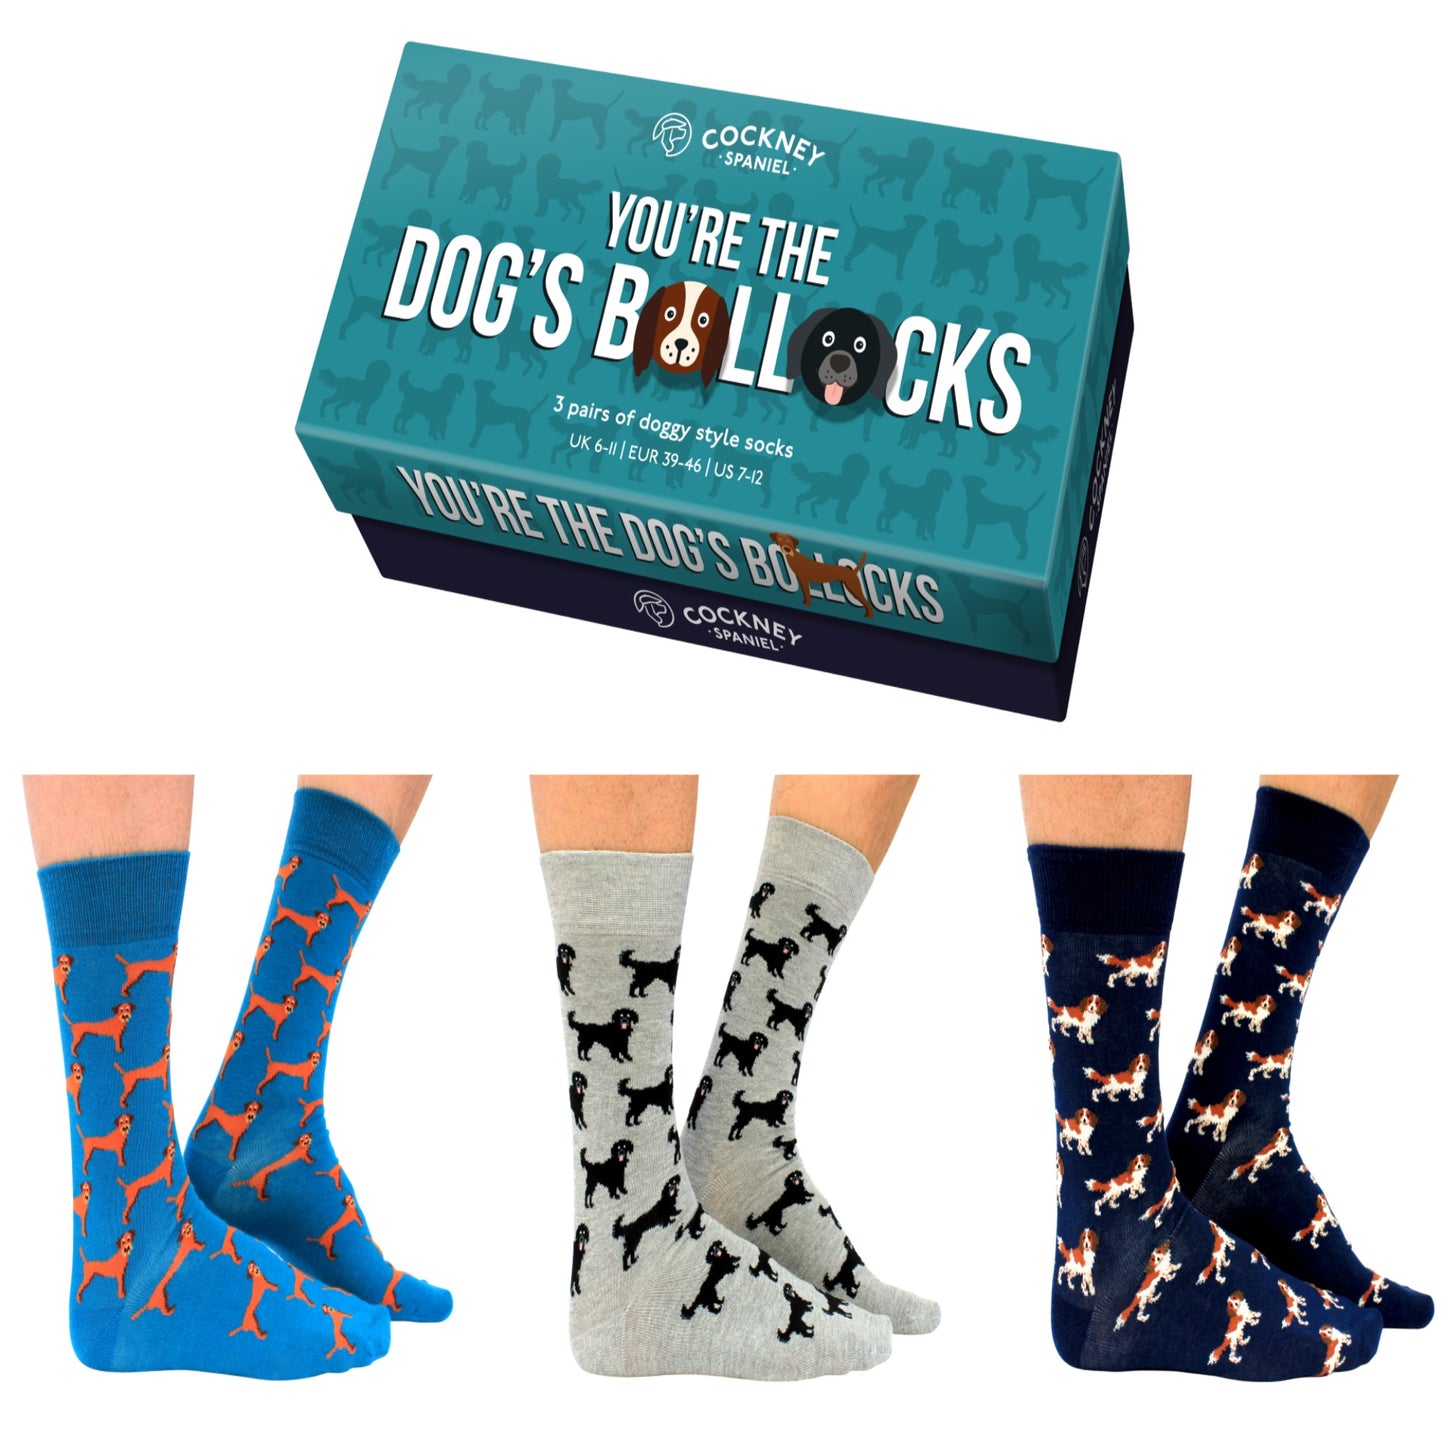 You’re the Dog’s Bollocks Socks - Gift Box - UK Sizes 6 - 11